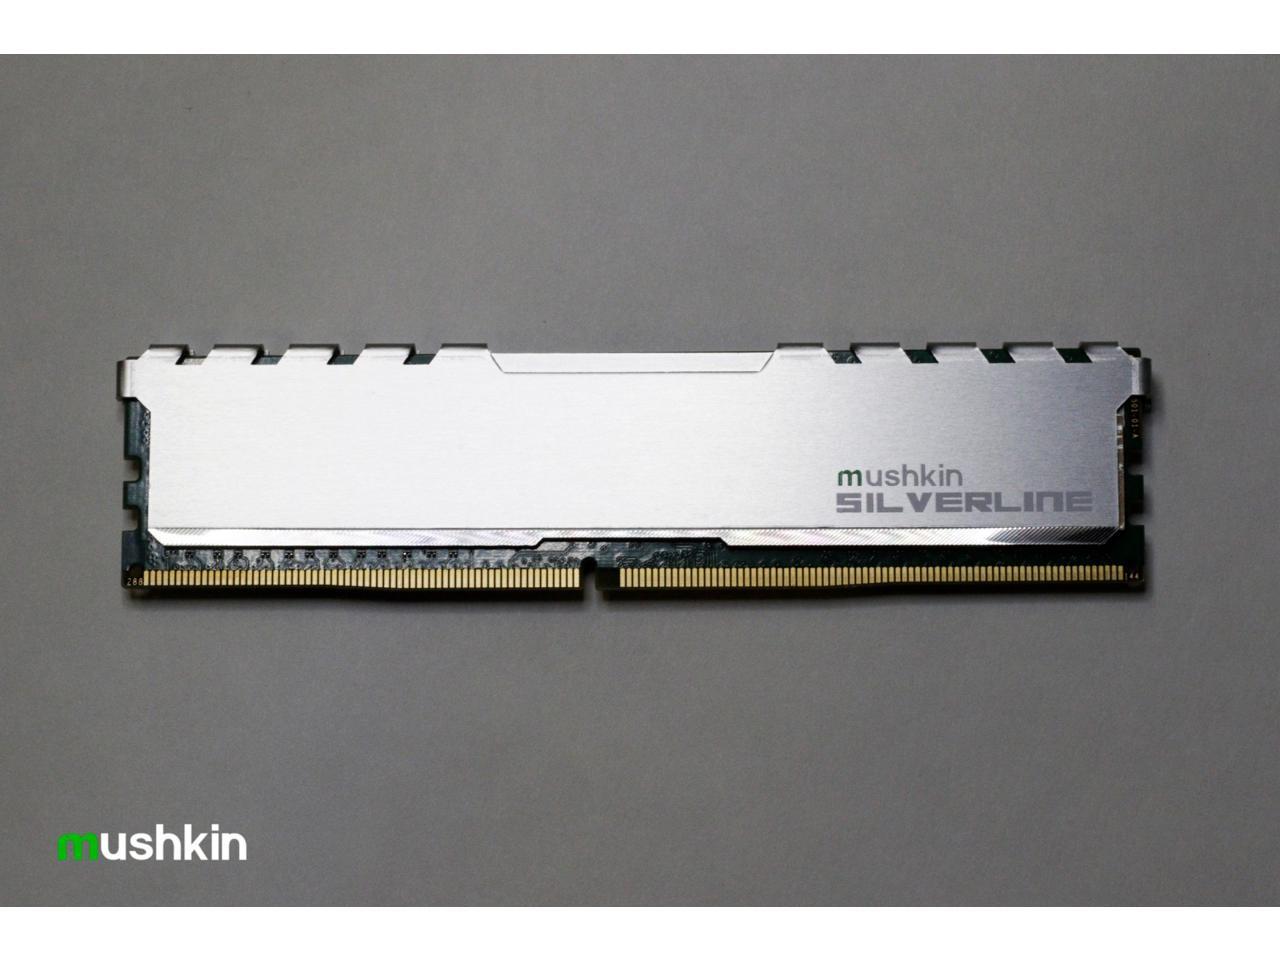 Mushkin Silverline 8GB (2X4GB) DDR4 2400MHz PC4-19200 Desktop Memory